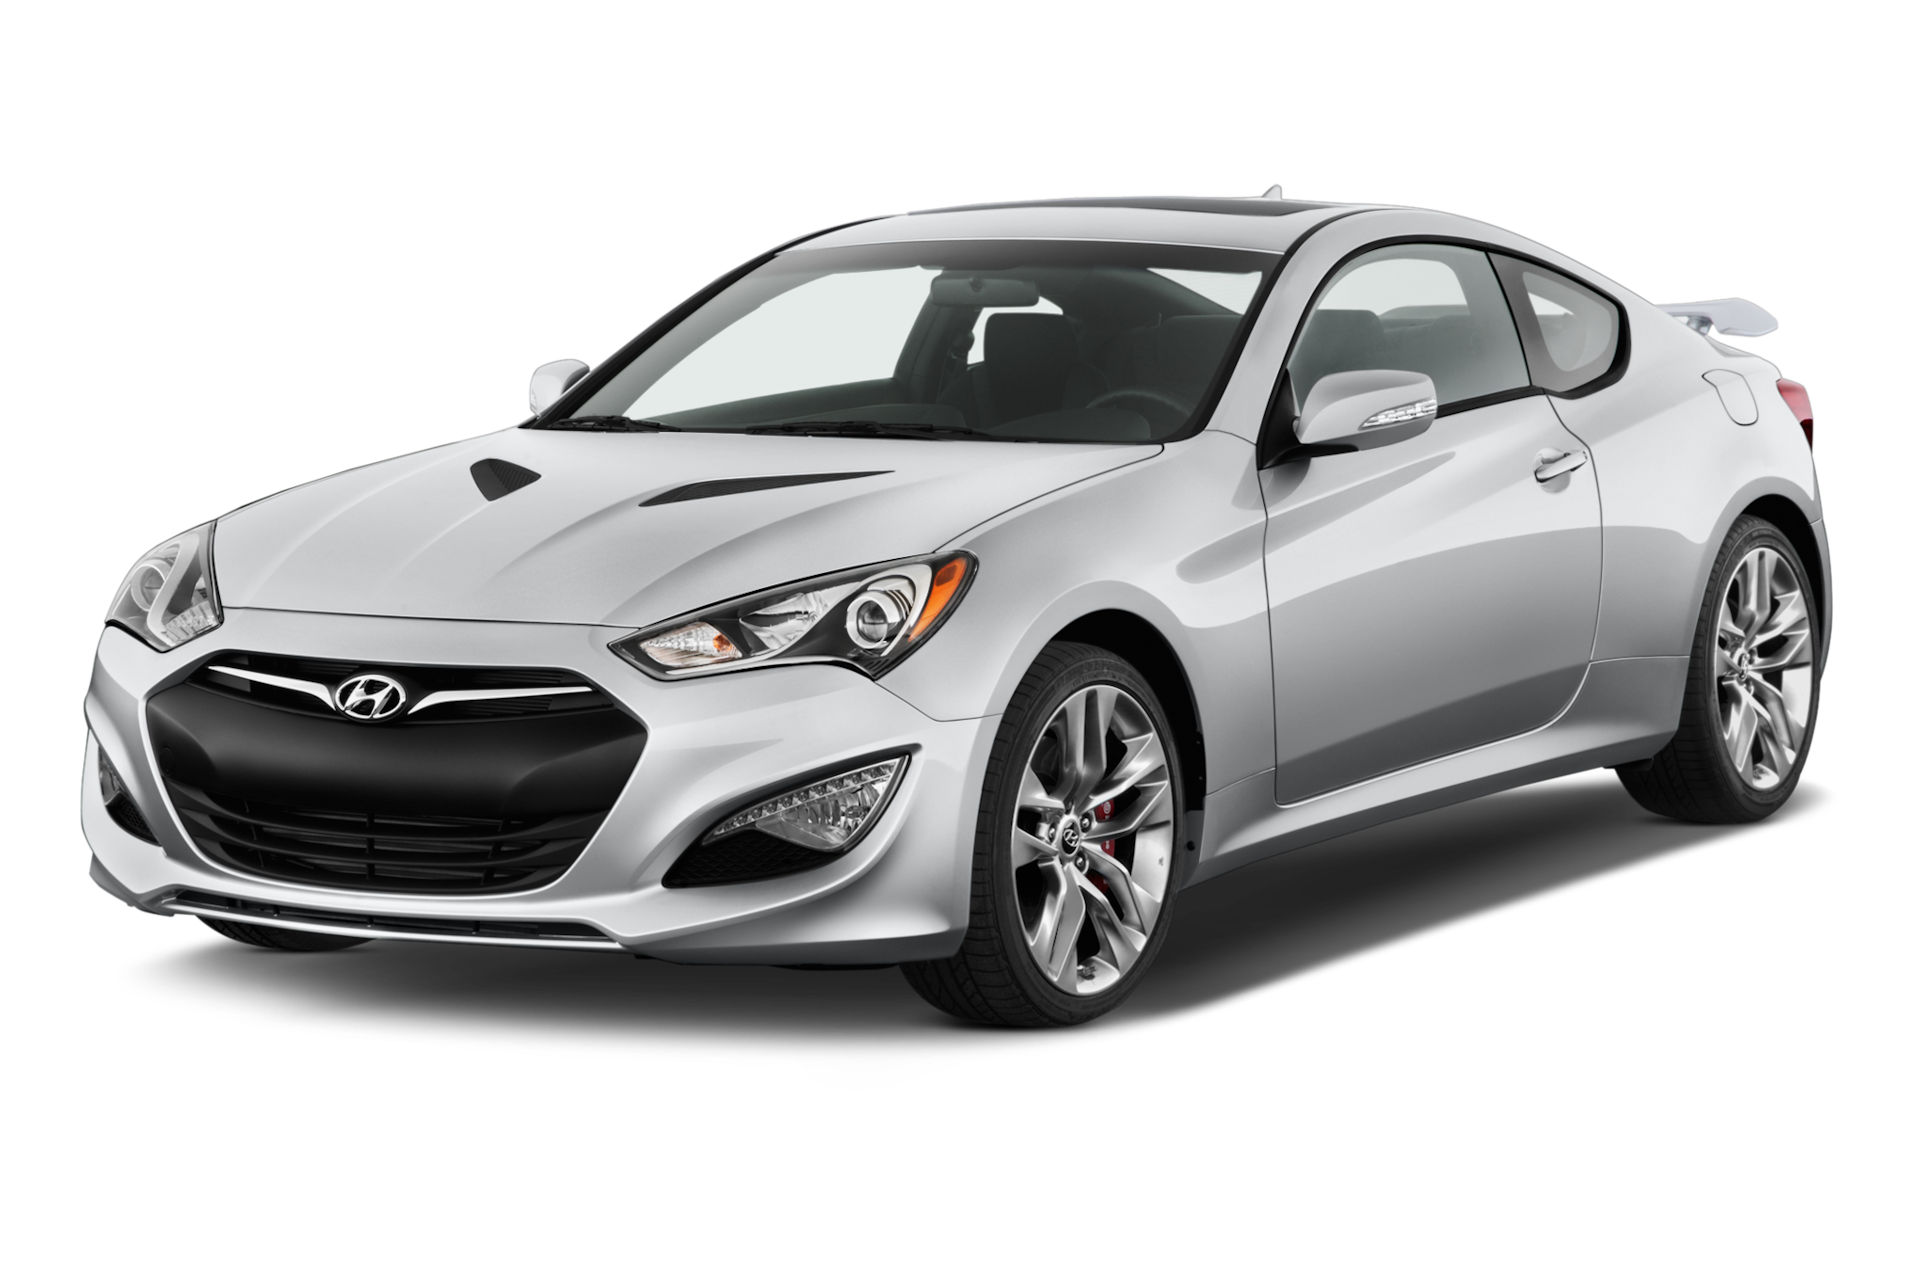 2015 Hyundai Genesis Coupe Prices, Reviews, and Photos - MotorTrend